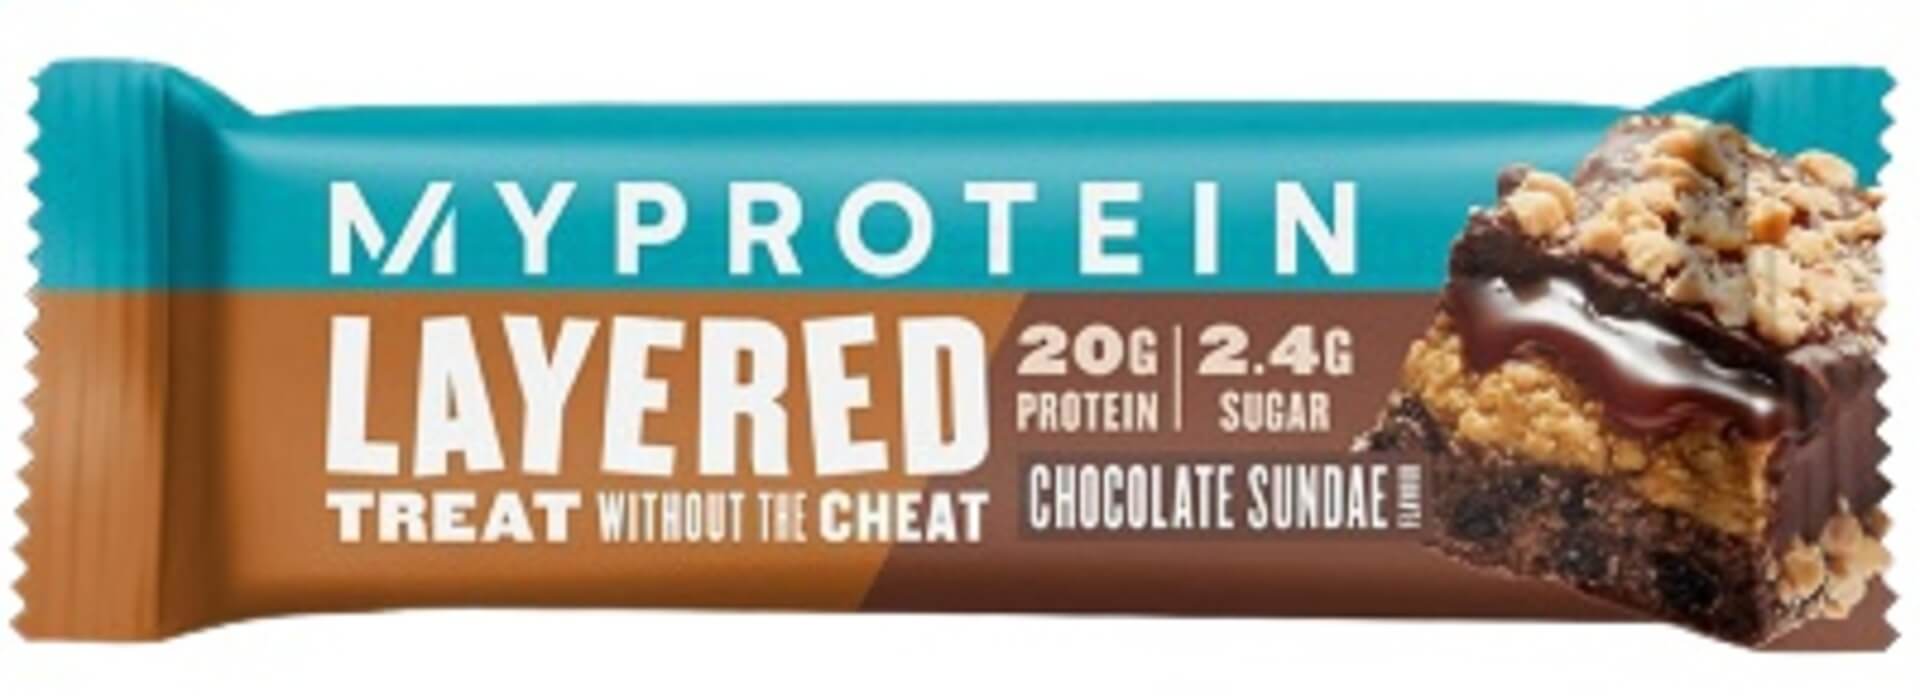 MyProtein Layered Protein Bar 60 g chocolate sundae